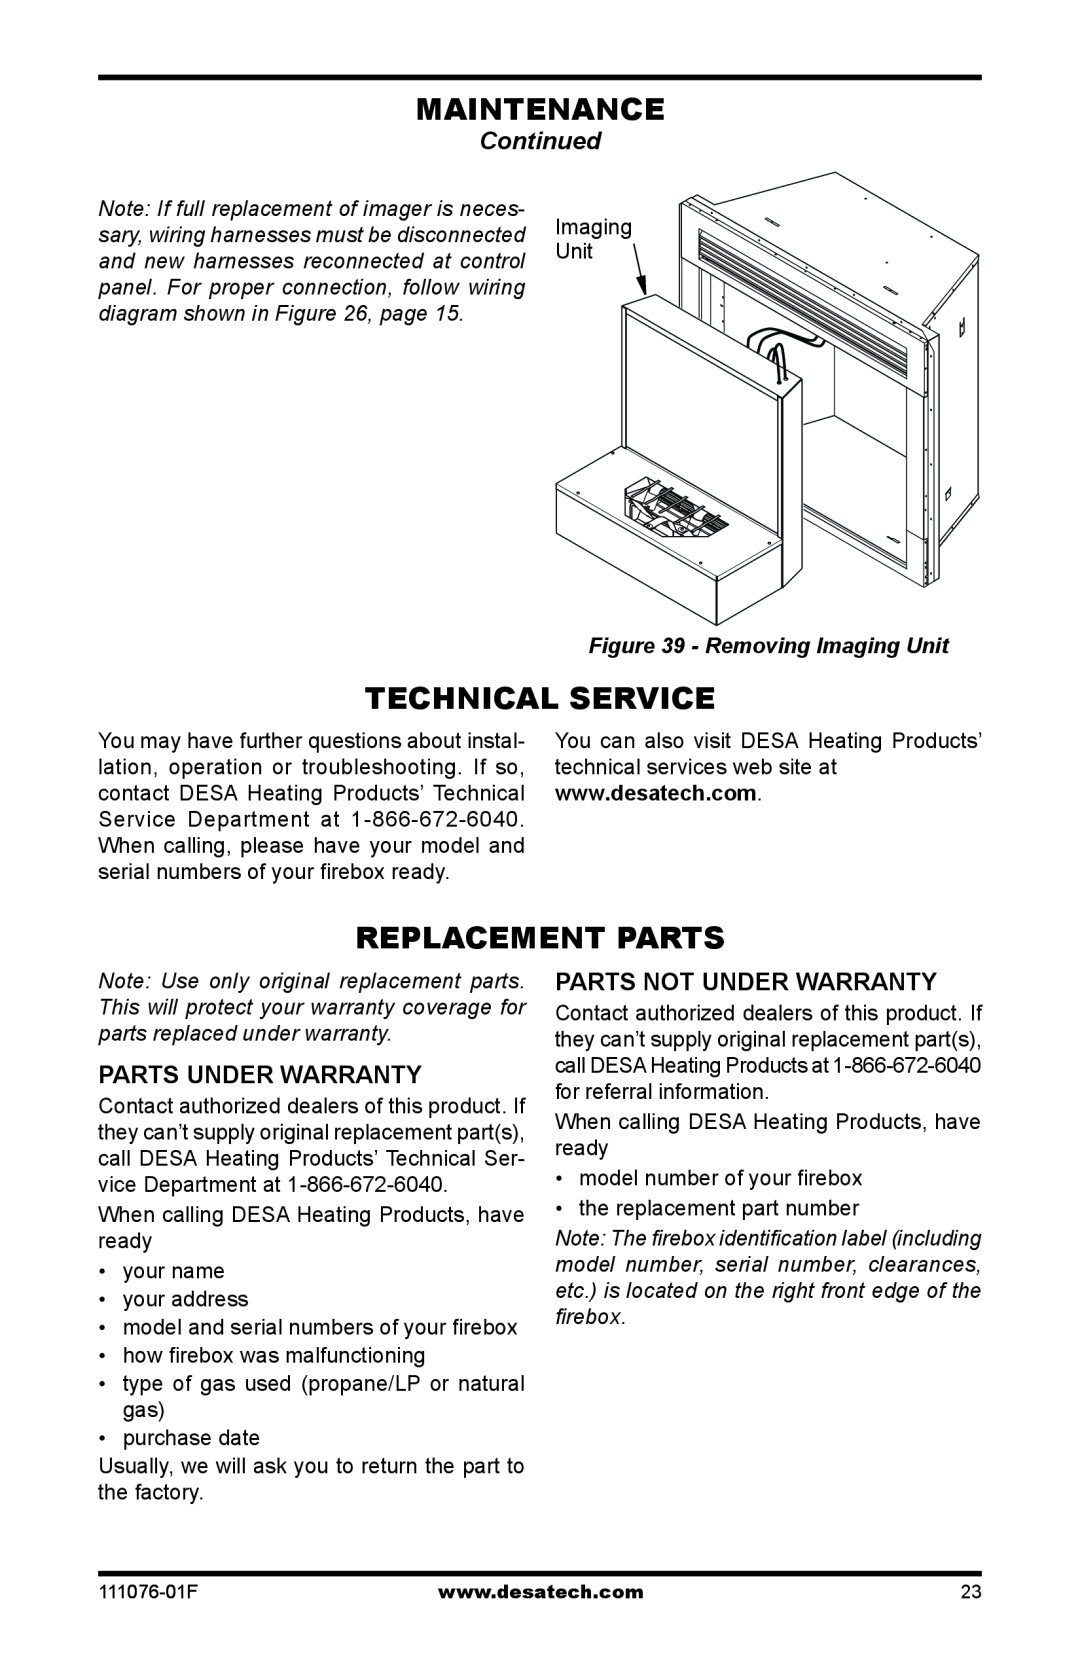 Desa E32LB Maintenance, Technical Service, Replacement Parts, Continued, Parts Under Warranty, Parts Not Under Warranty 